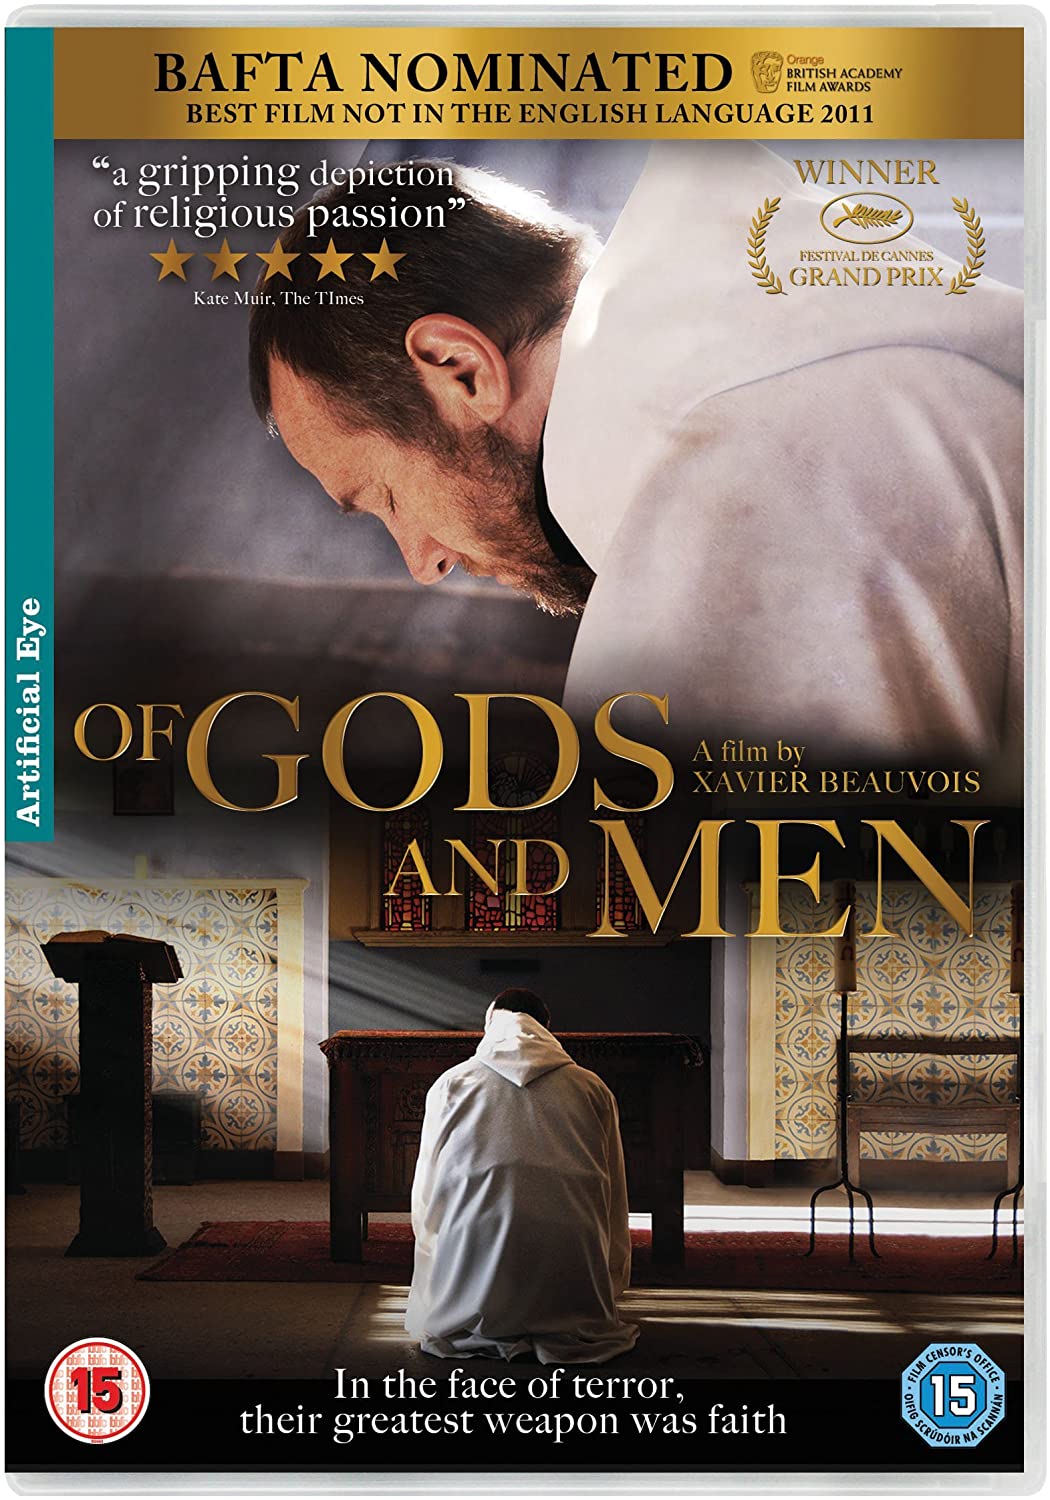 Of Gods And Men [2010] - Drama/History [DVD]